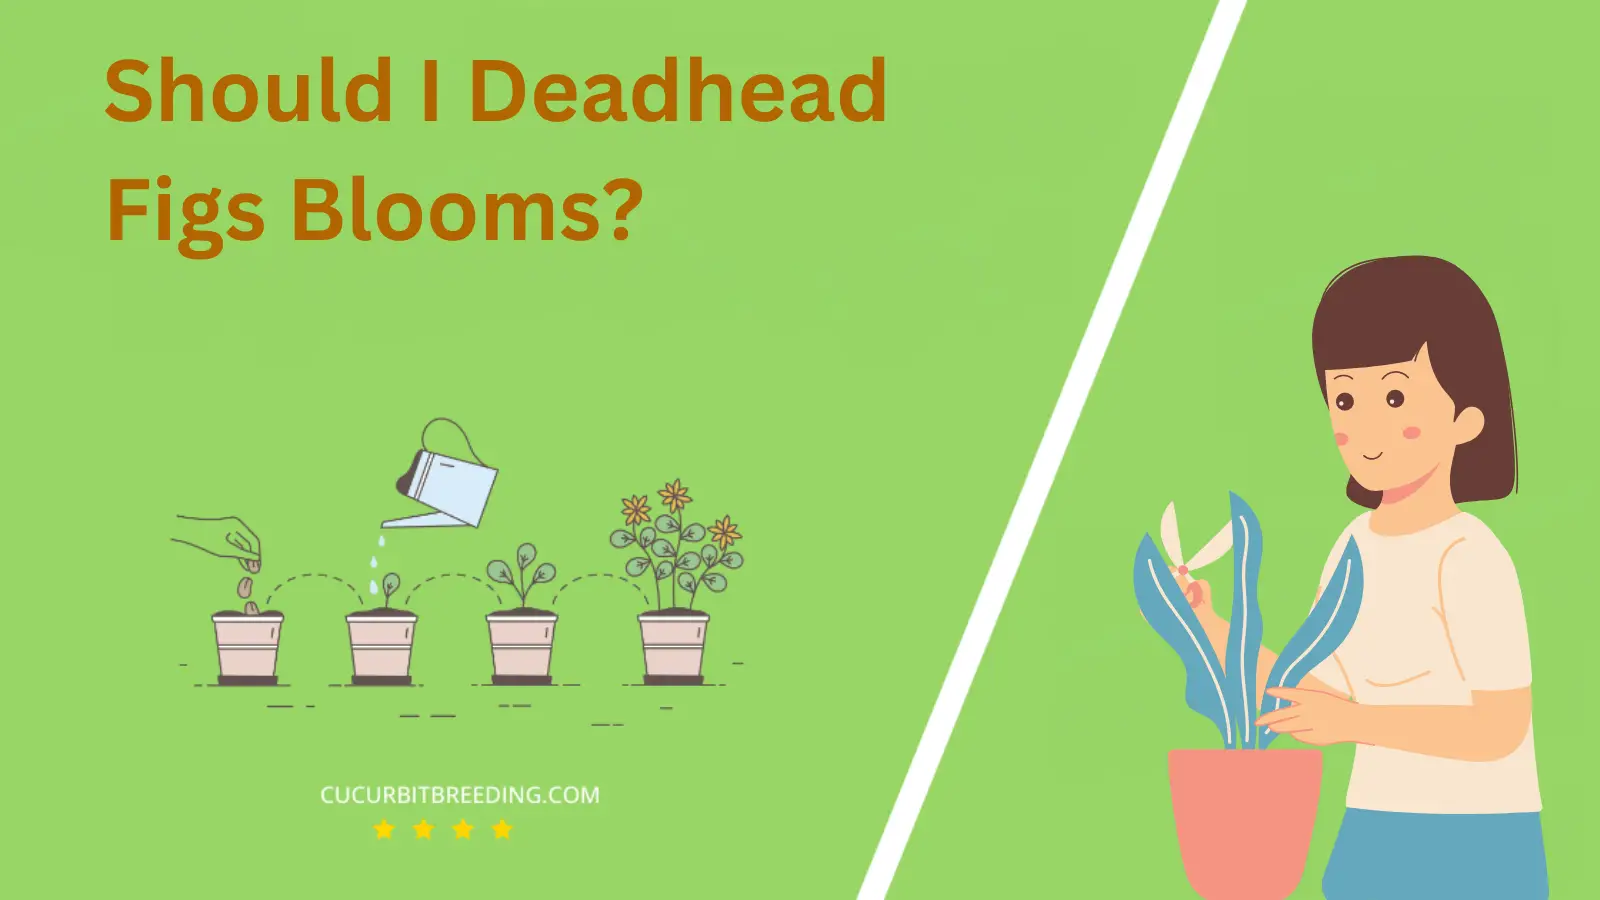 Should I Deadhead Figs Blooms?